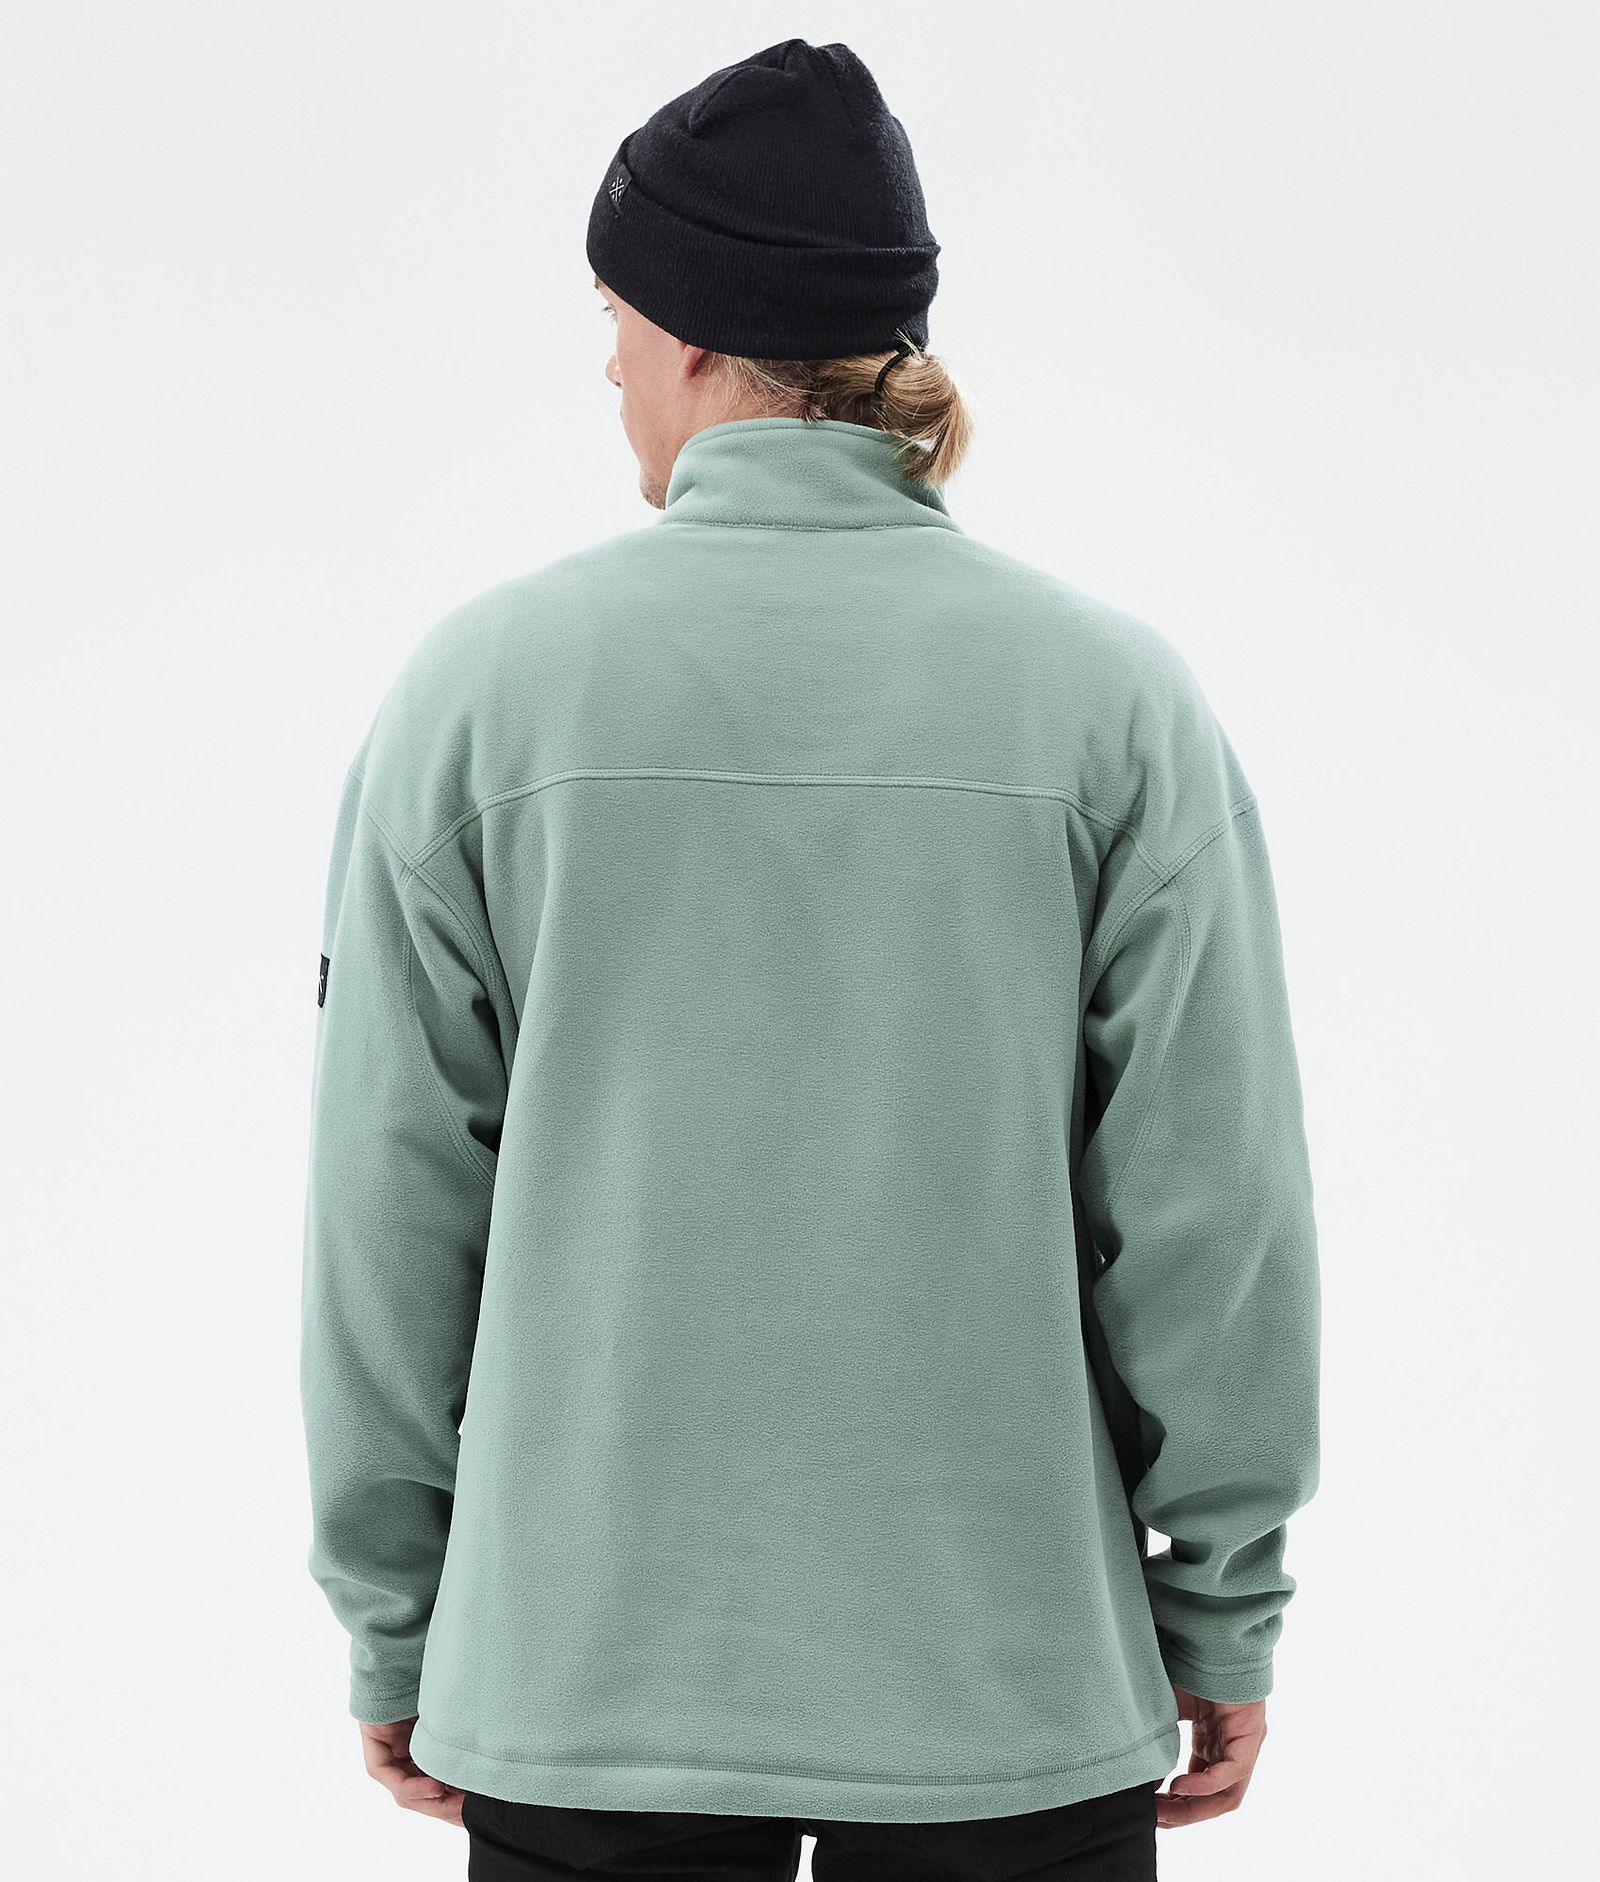 Dope Comfy Fleece Sweater Men Faded Green